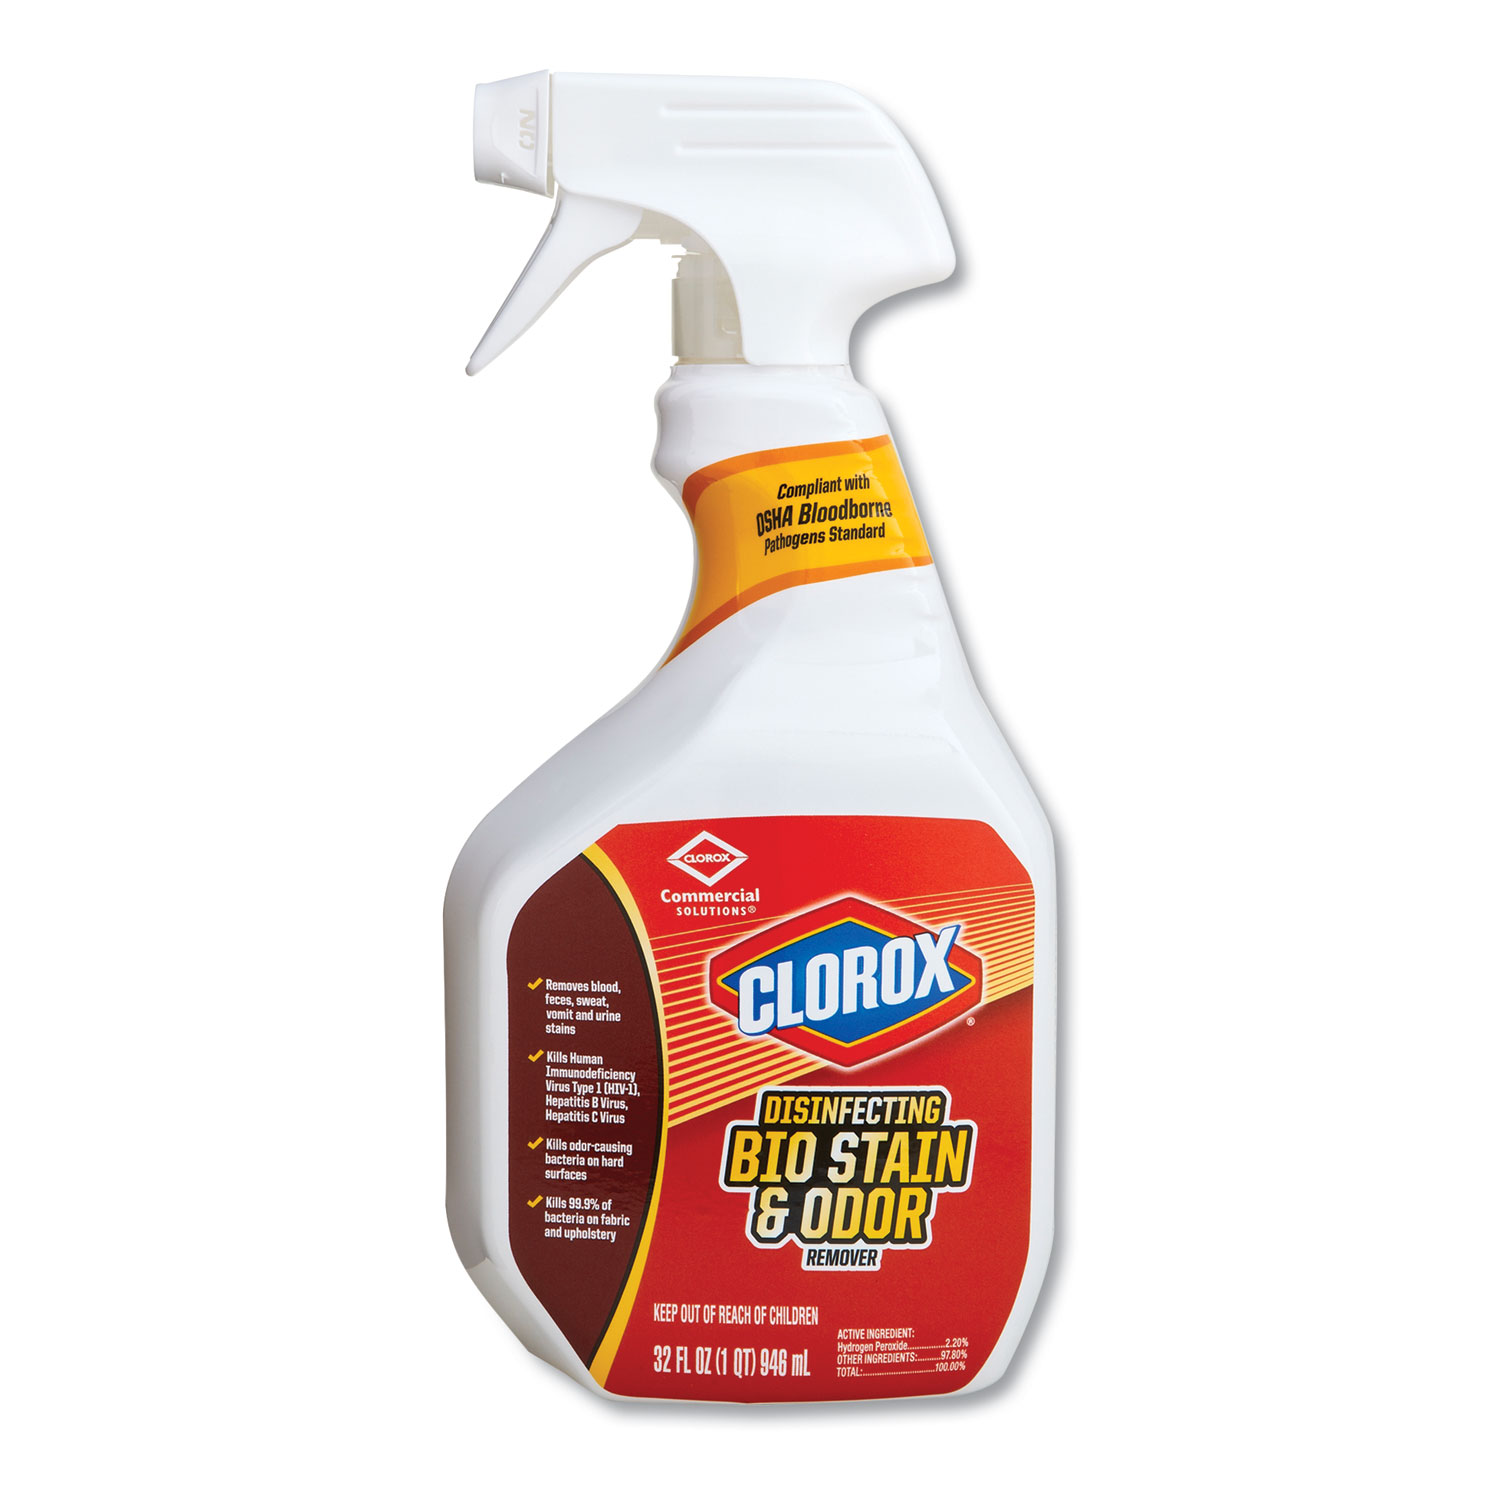  Clorox 31903EA Disinfecting Bio Stain and Odor Remover, Fragranced, 32 oz Spray Bottle (CLO31903EA) 